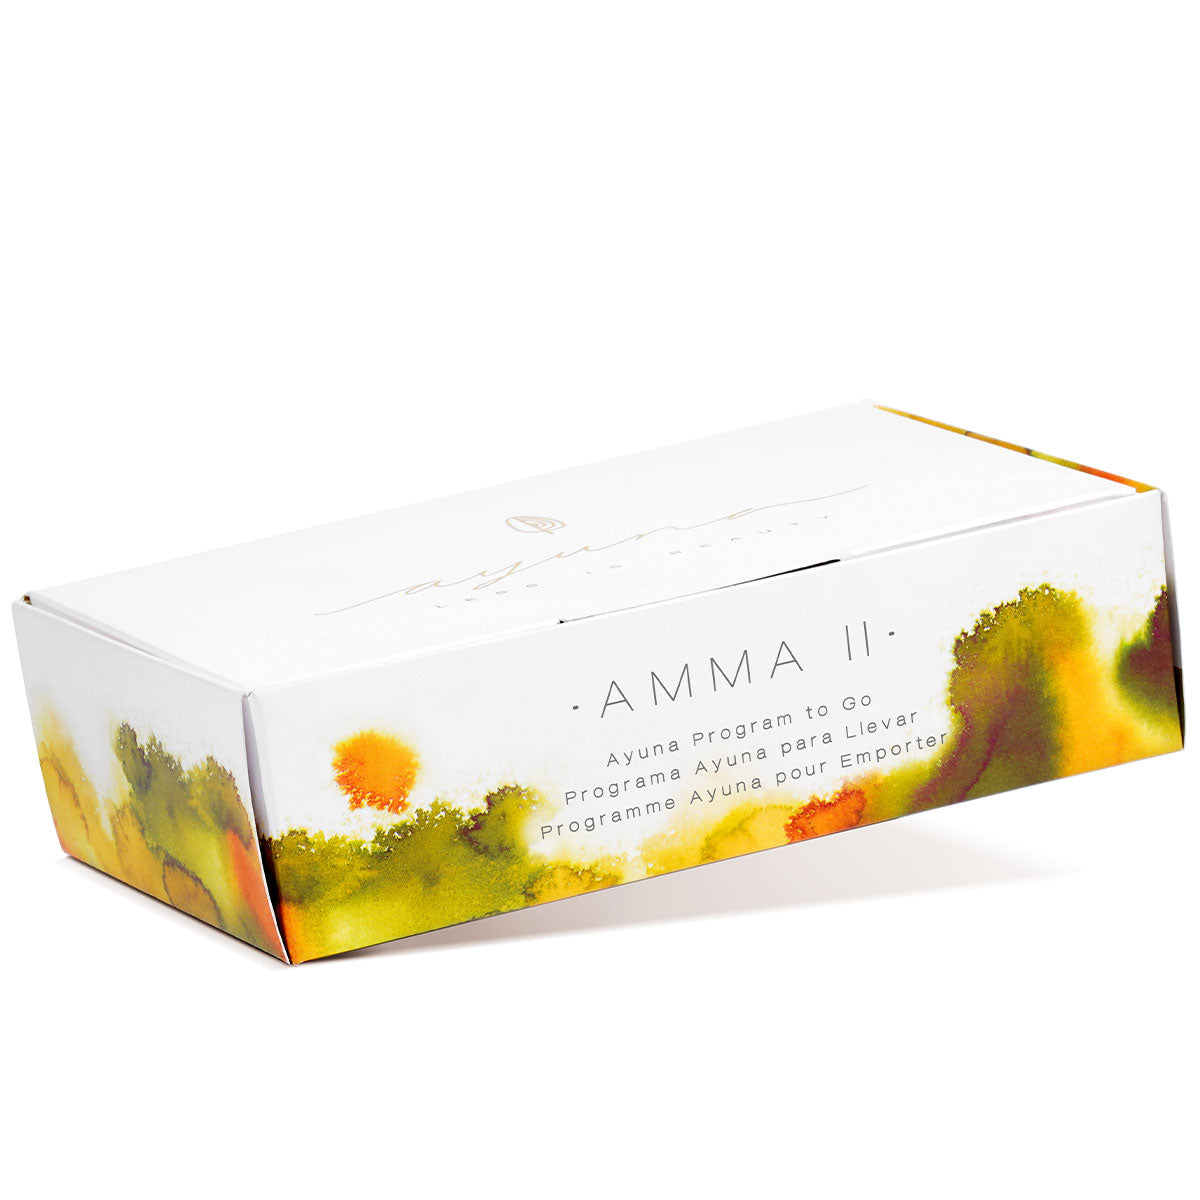 Ensemble Ayuna Programme to Go Rich Amma II : savon, crème II, essence, après-shampooing, voile, soin du visage